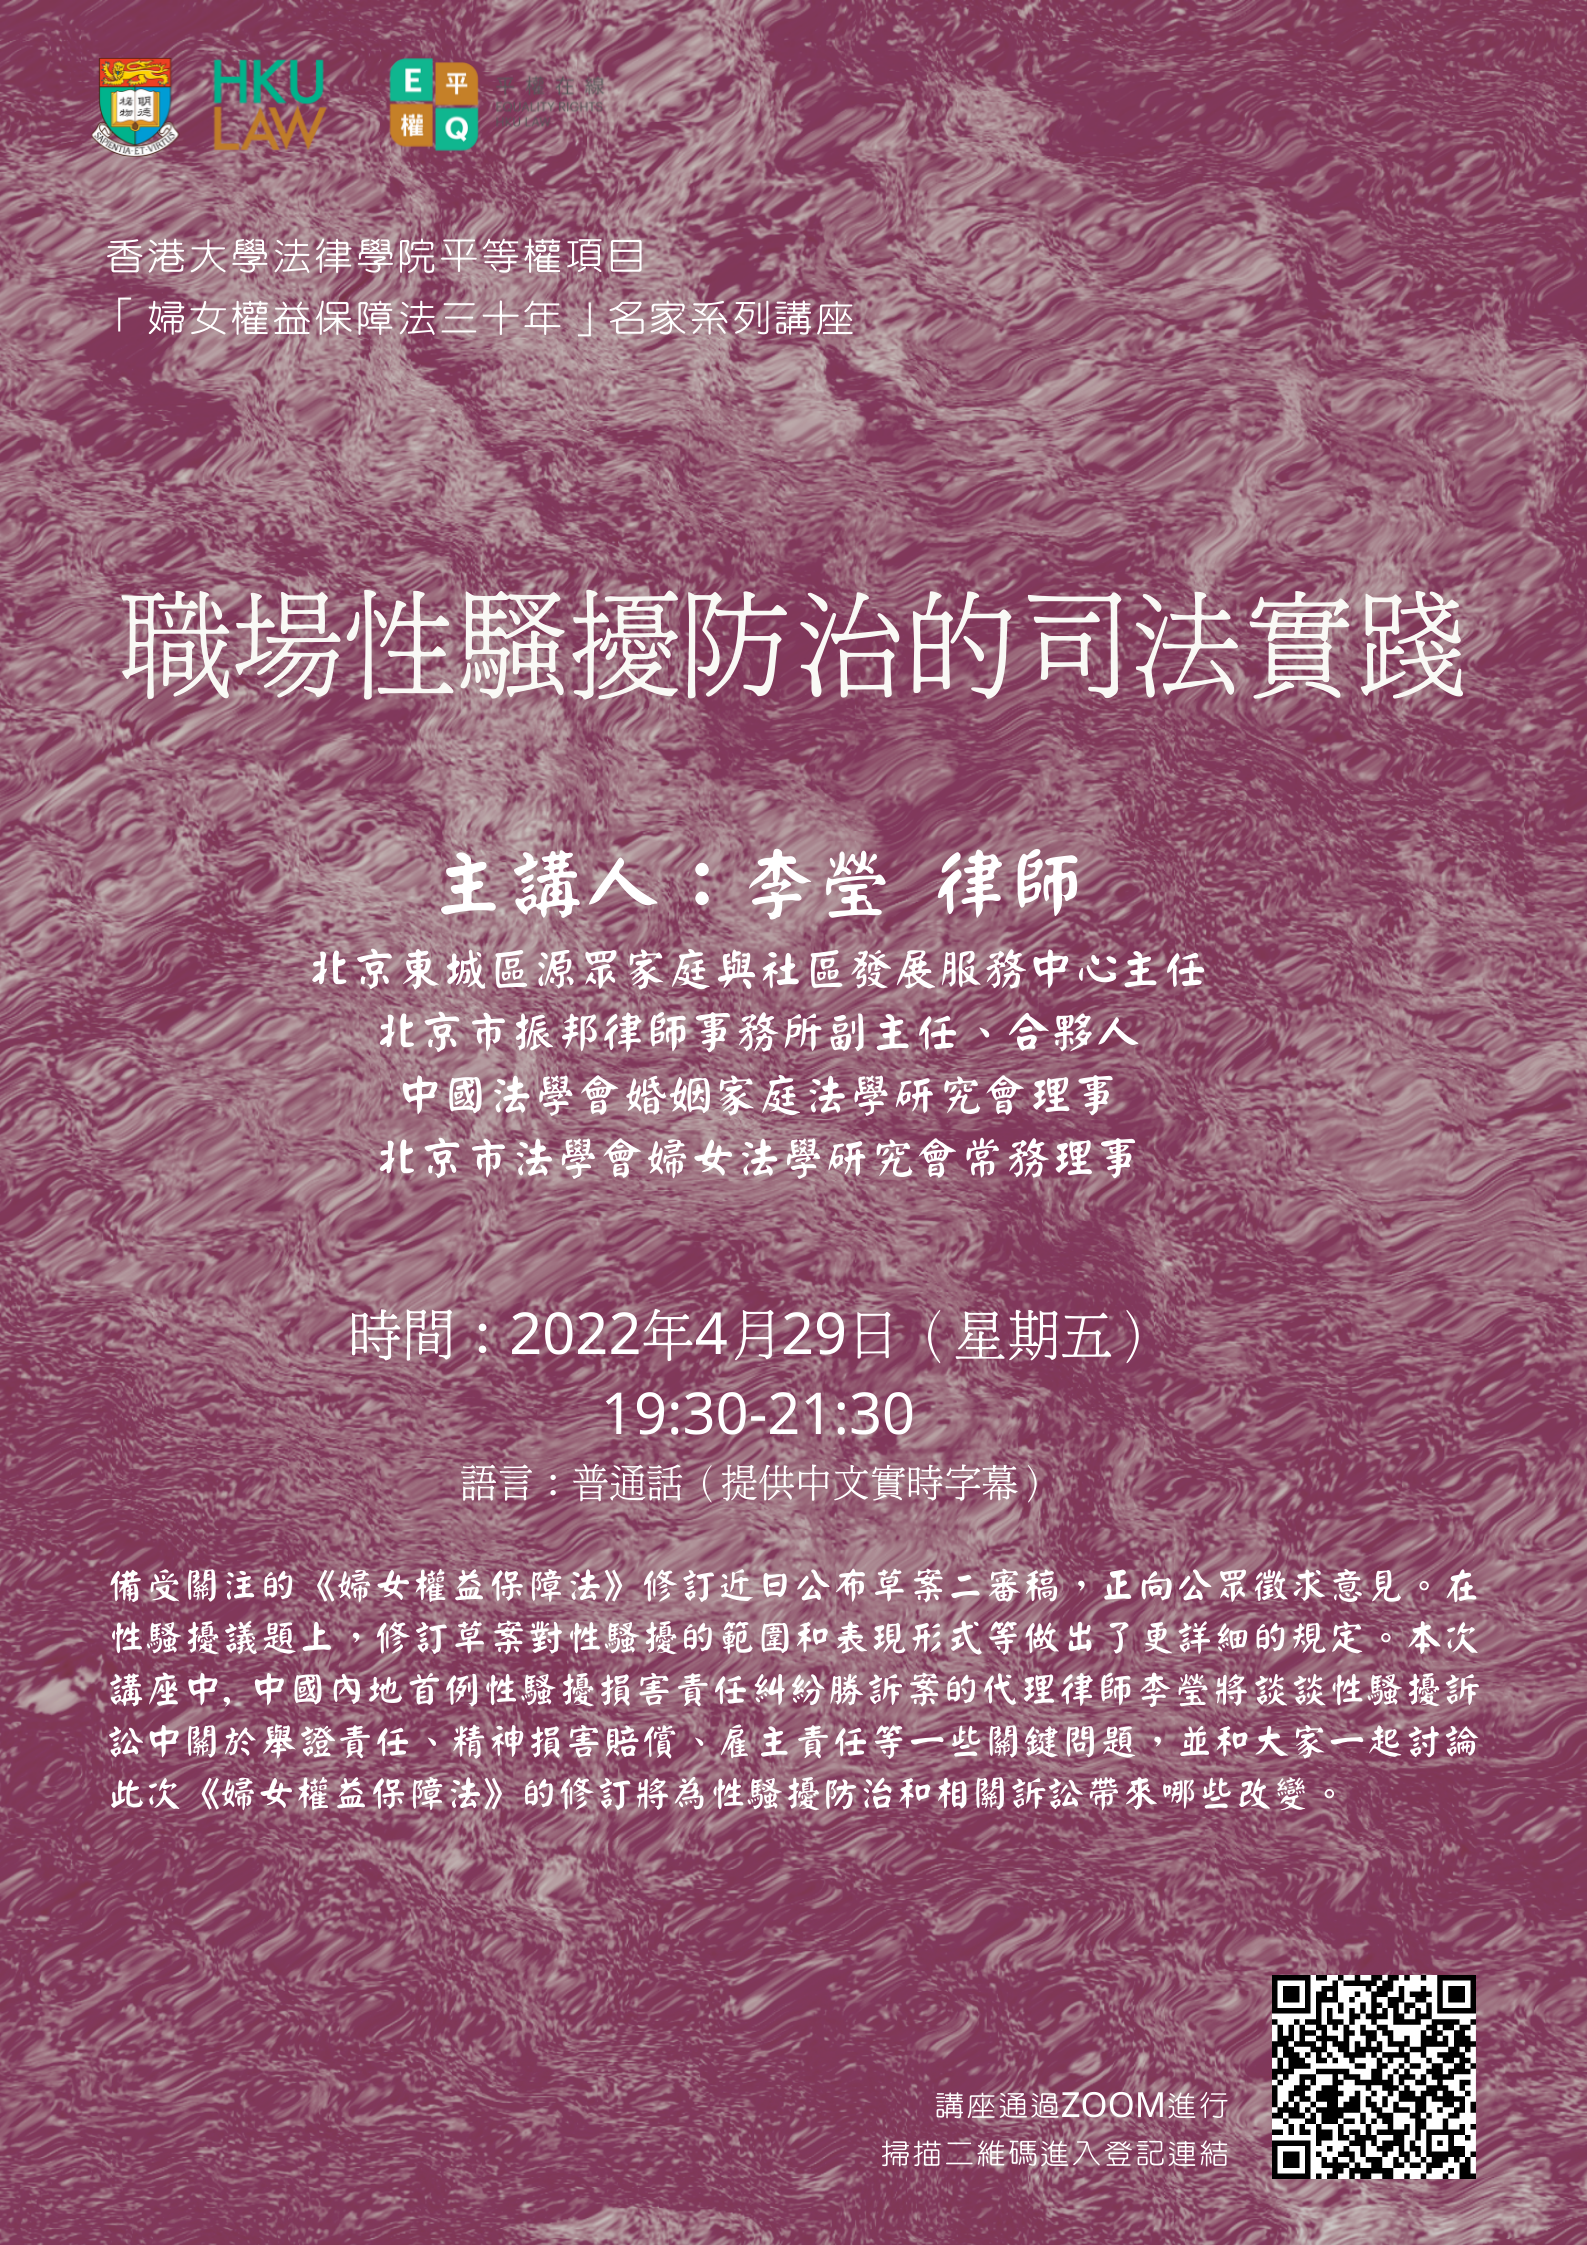 HKU Poster 20220429